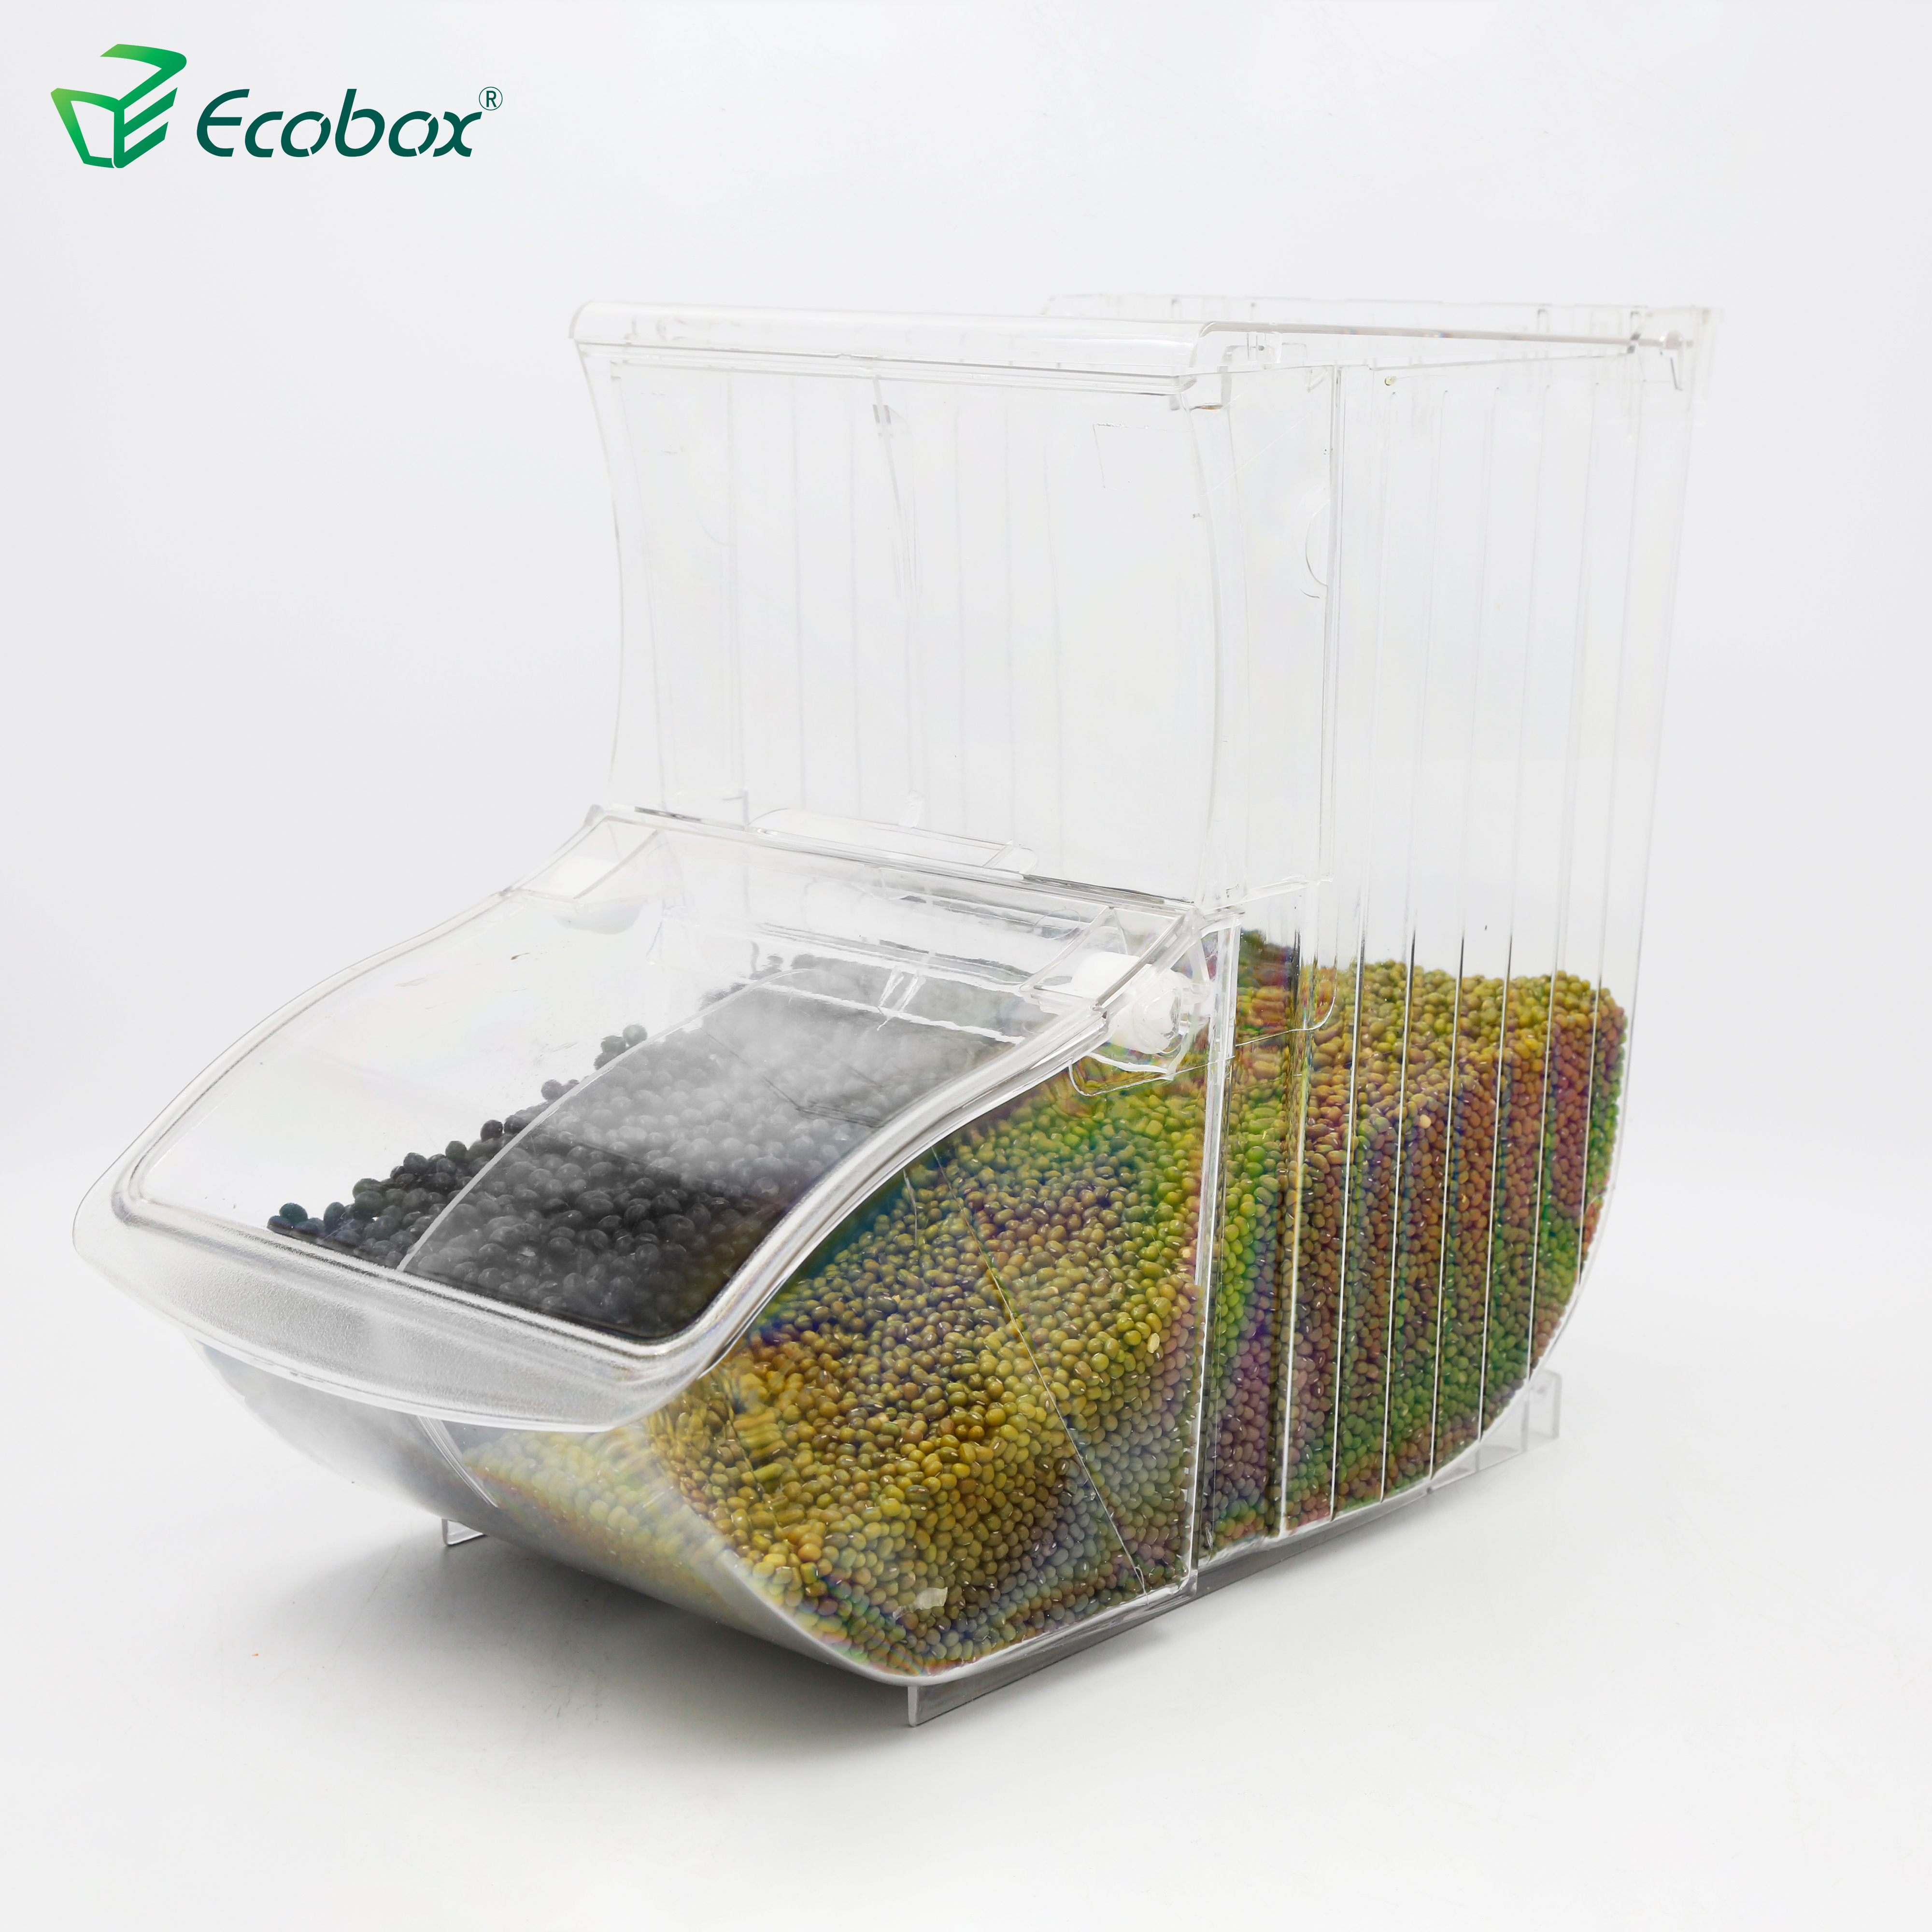 Ecobox SPH-003 bin Scoop